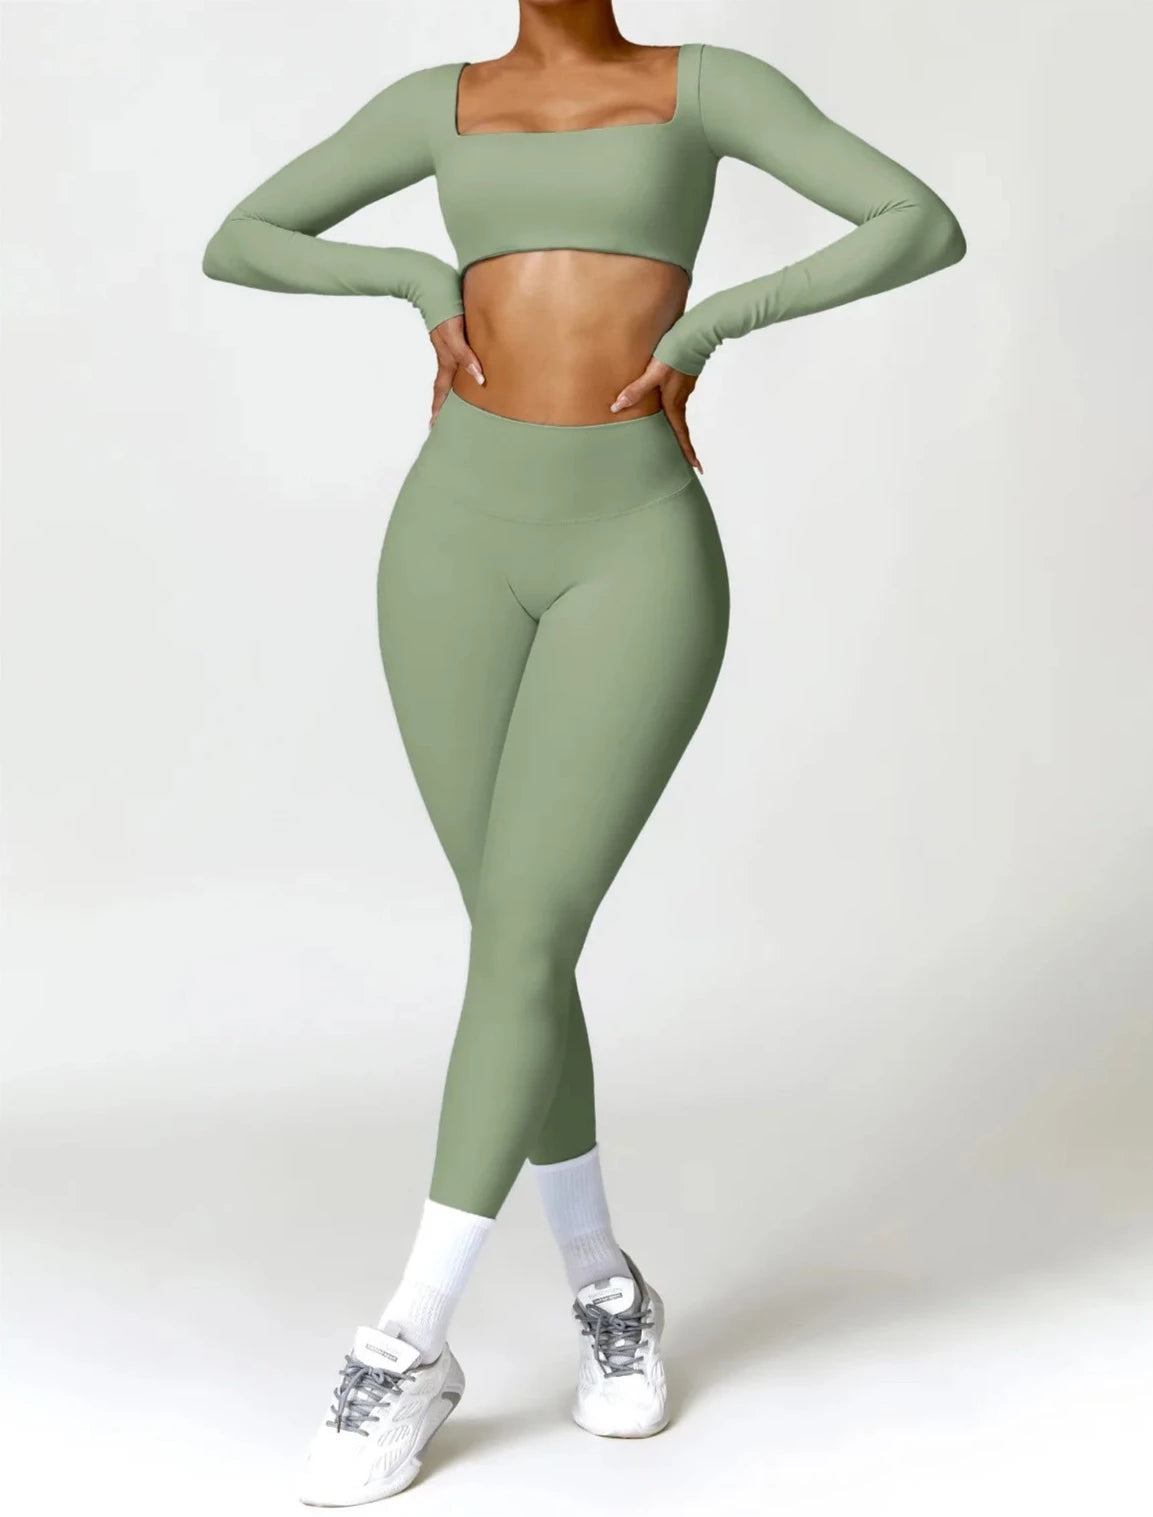 Winter Flex Performance Shirt Set - Leggings + Top Sets Starlethics Green S 